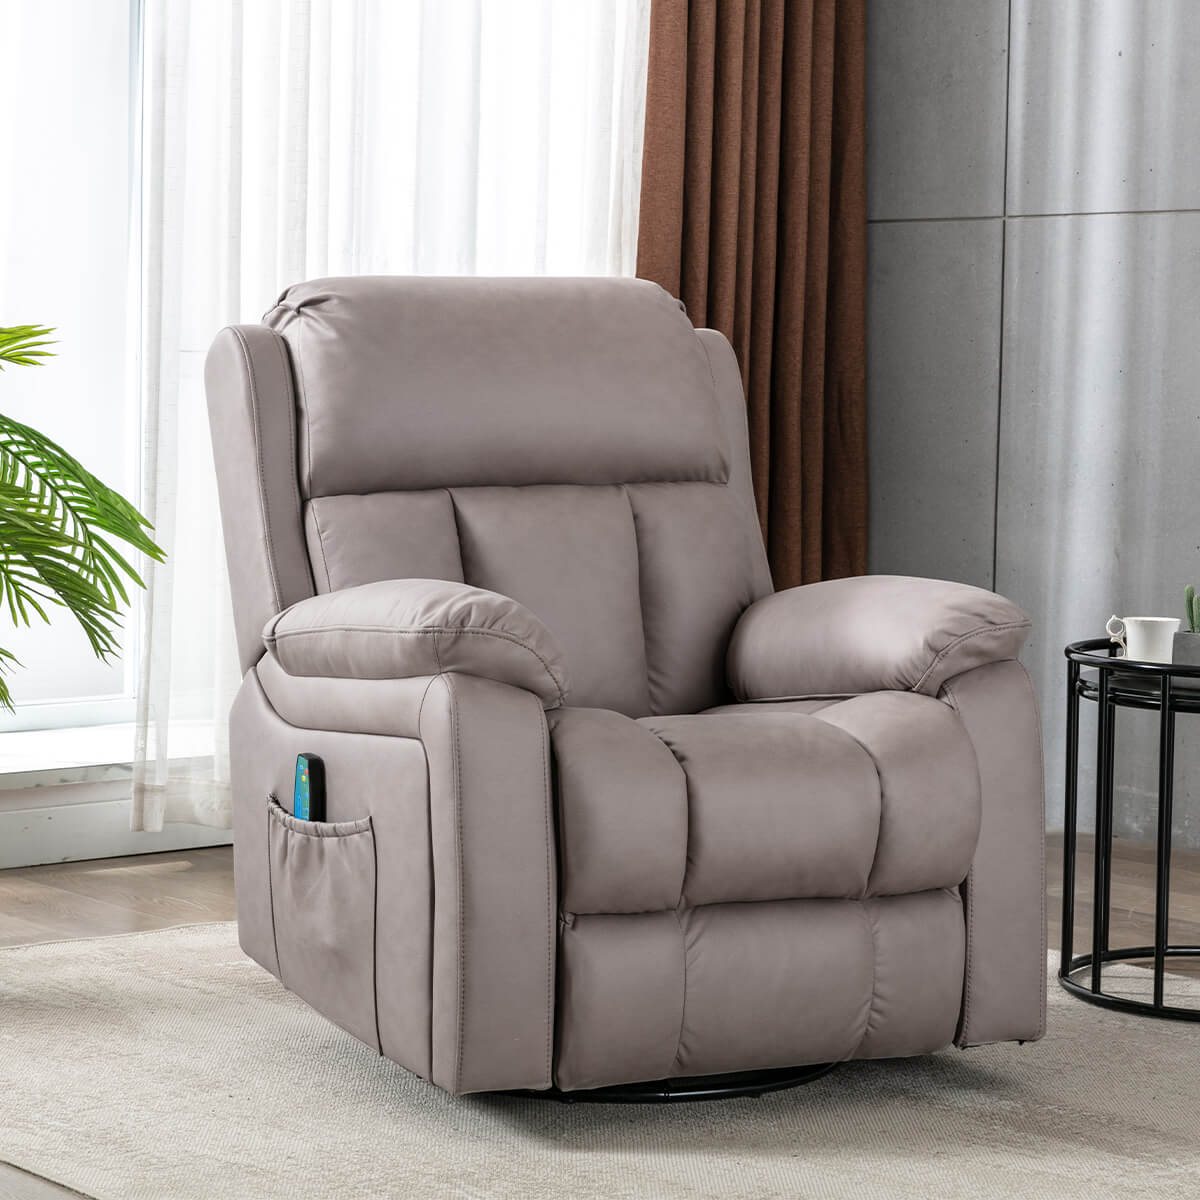 360° Swivel Massage Recliner Chairw/ Side Pockets, Coffee